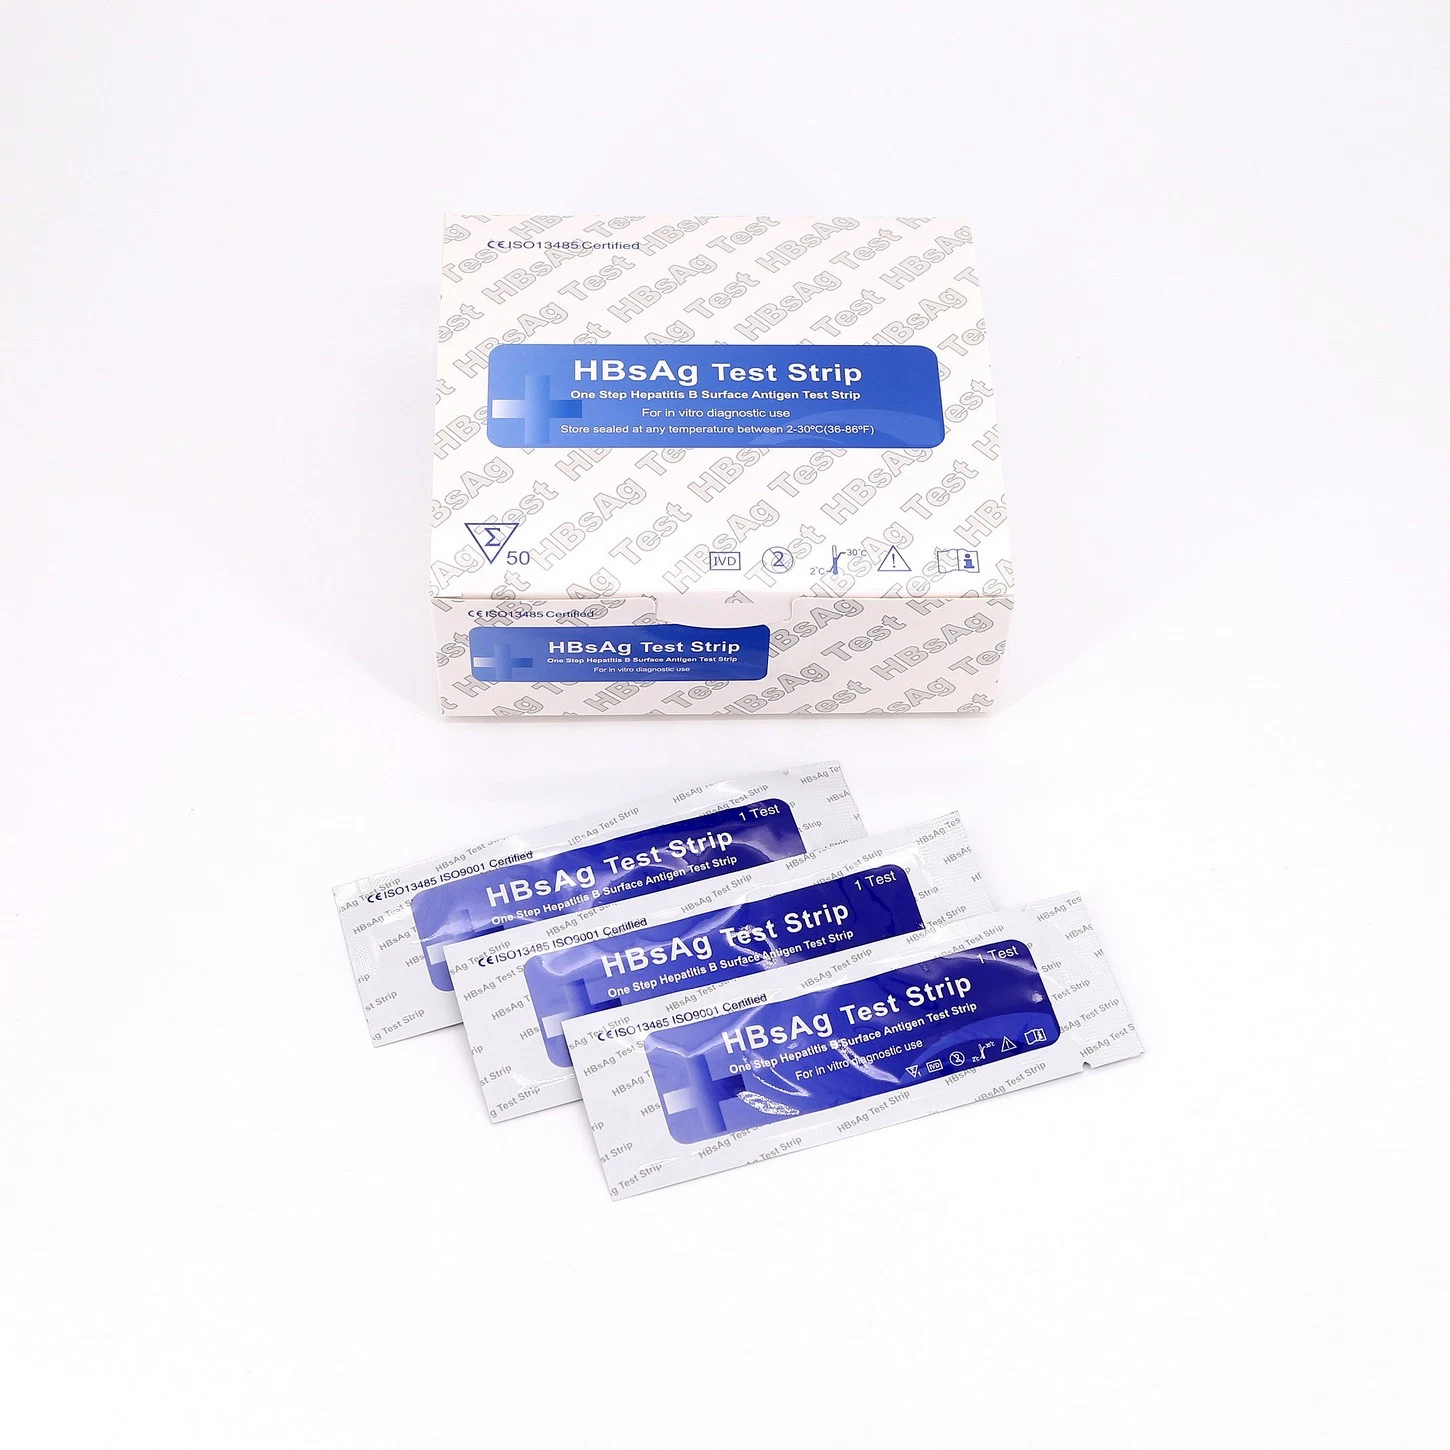 Medical Disposable Whole Blood/ Serum/ Plasma Rapid One Step Hbsag/Absag Hepatitis B Surface Antigen Test Strip/Cassette Kit for in Vitro Diagnostic Use